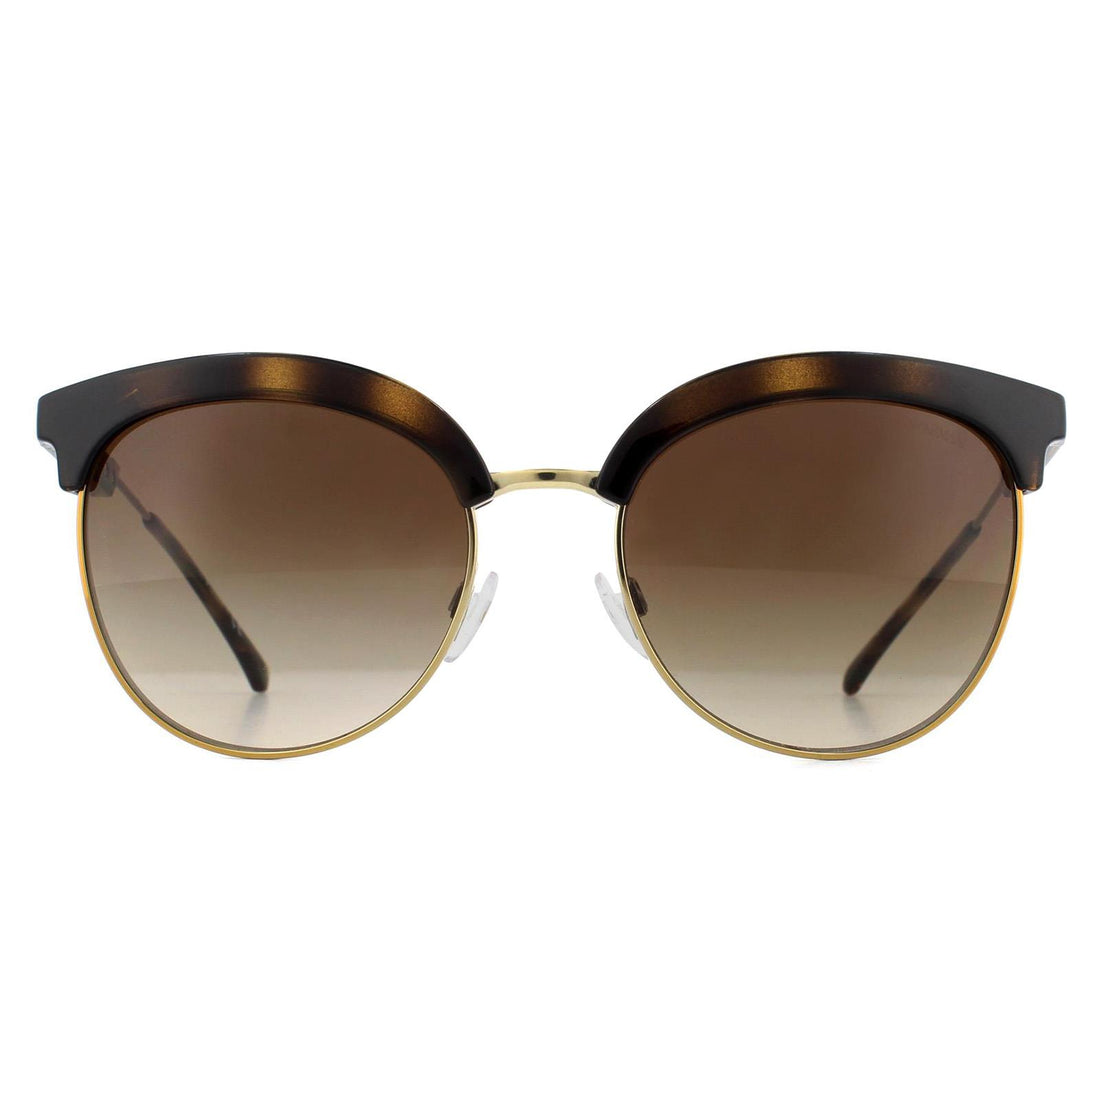 Emporio Armani EA4102 Sunglasses Dark Havana Pale Gold / Brown Gradient